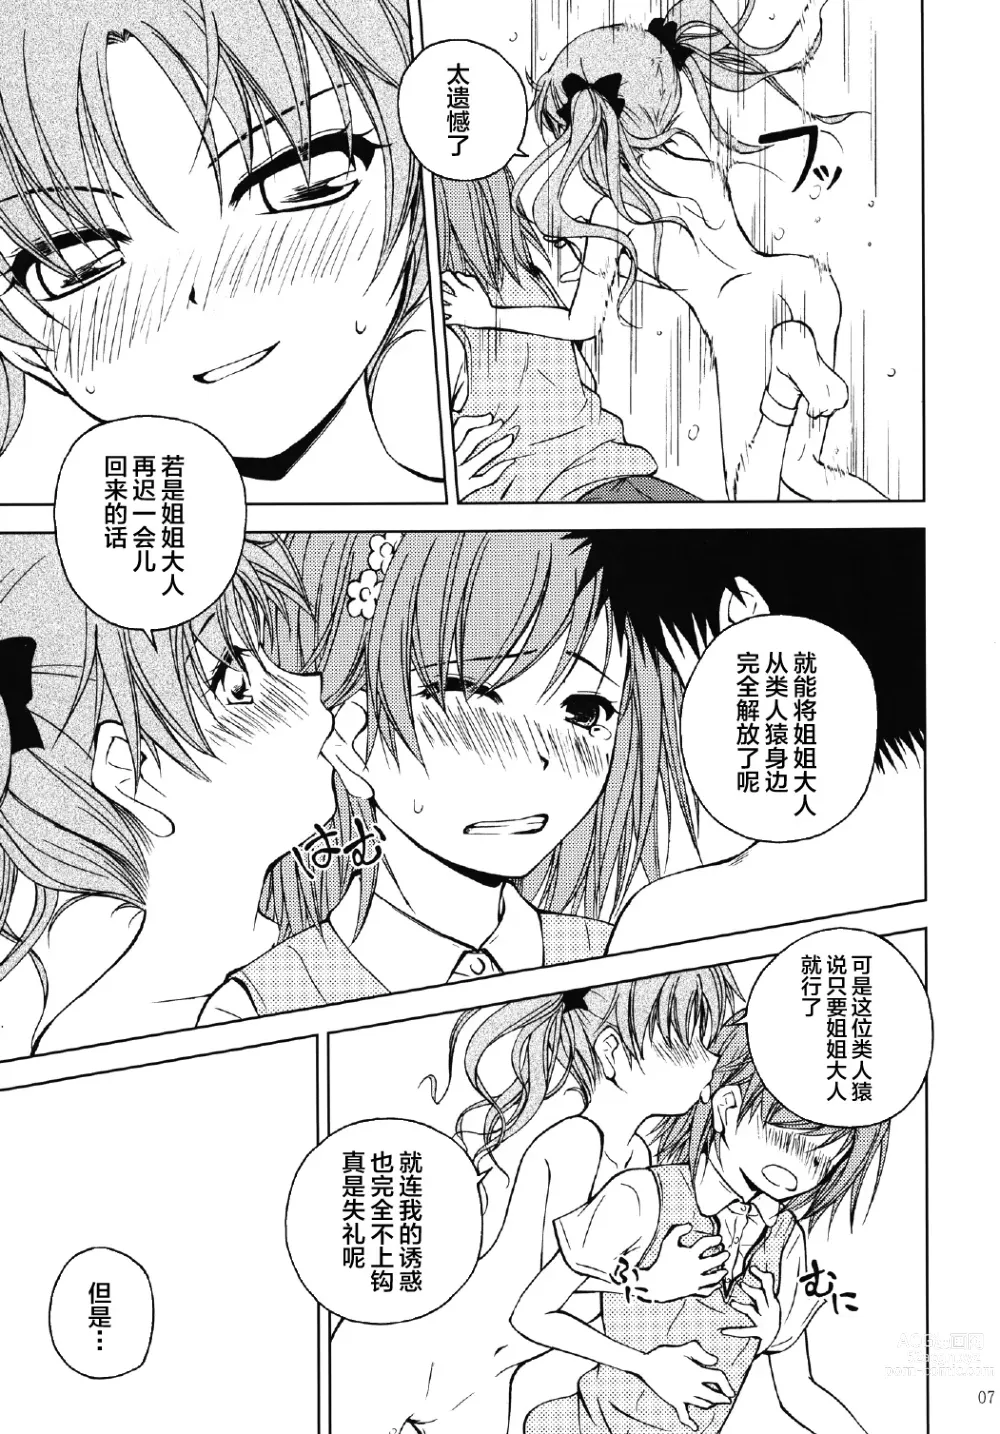 Page 7 of doujinshi Onee-sama o Ruijinen to Sememakuri desu no!!